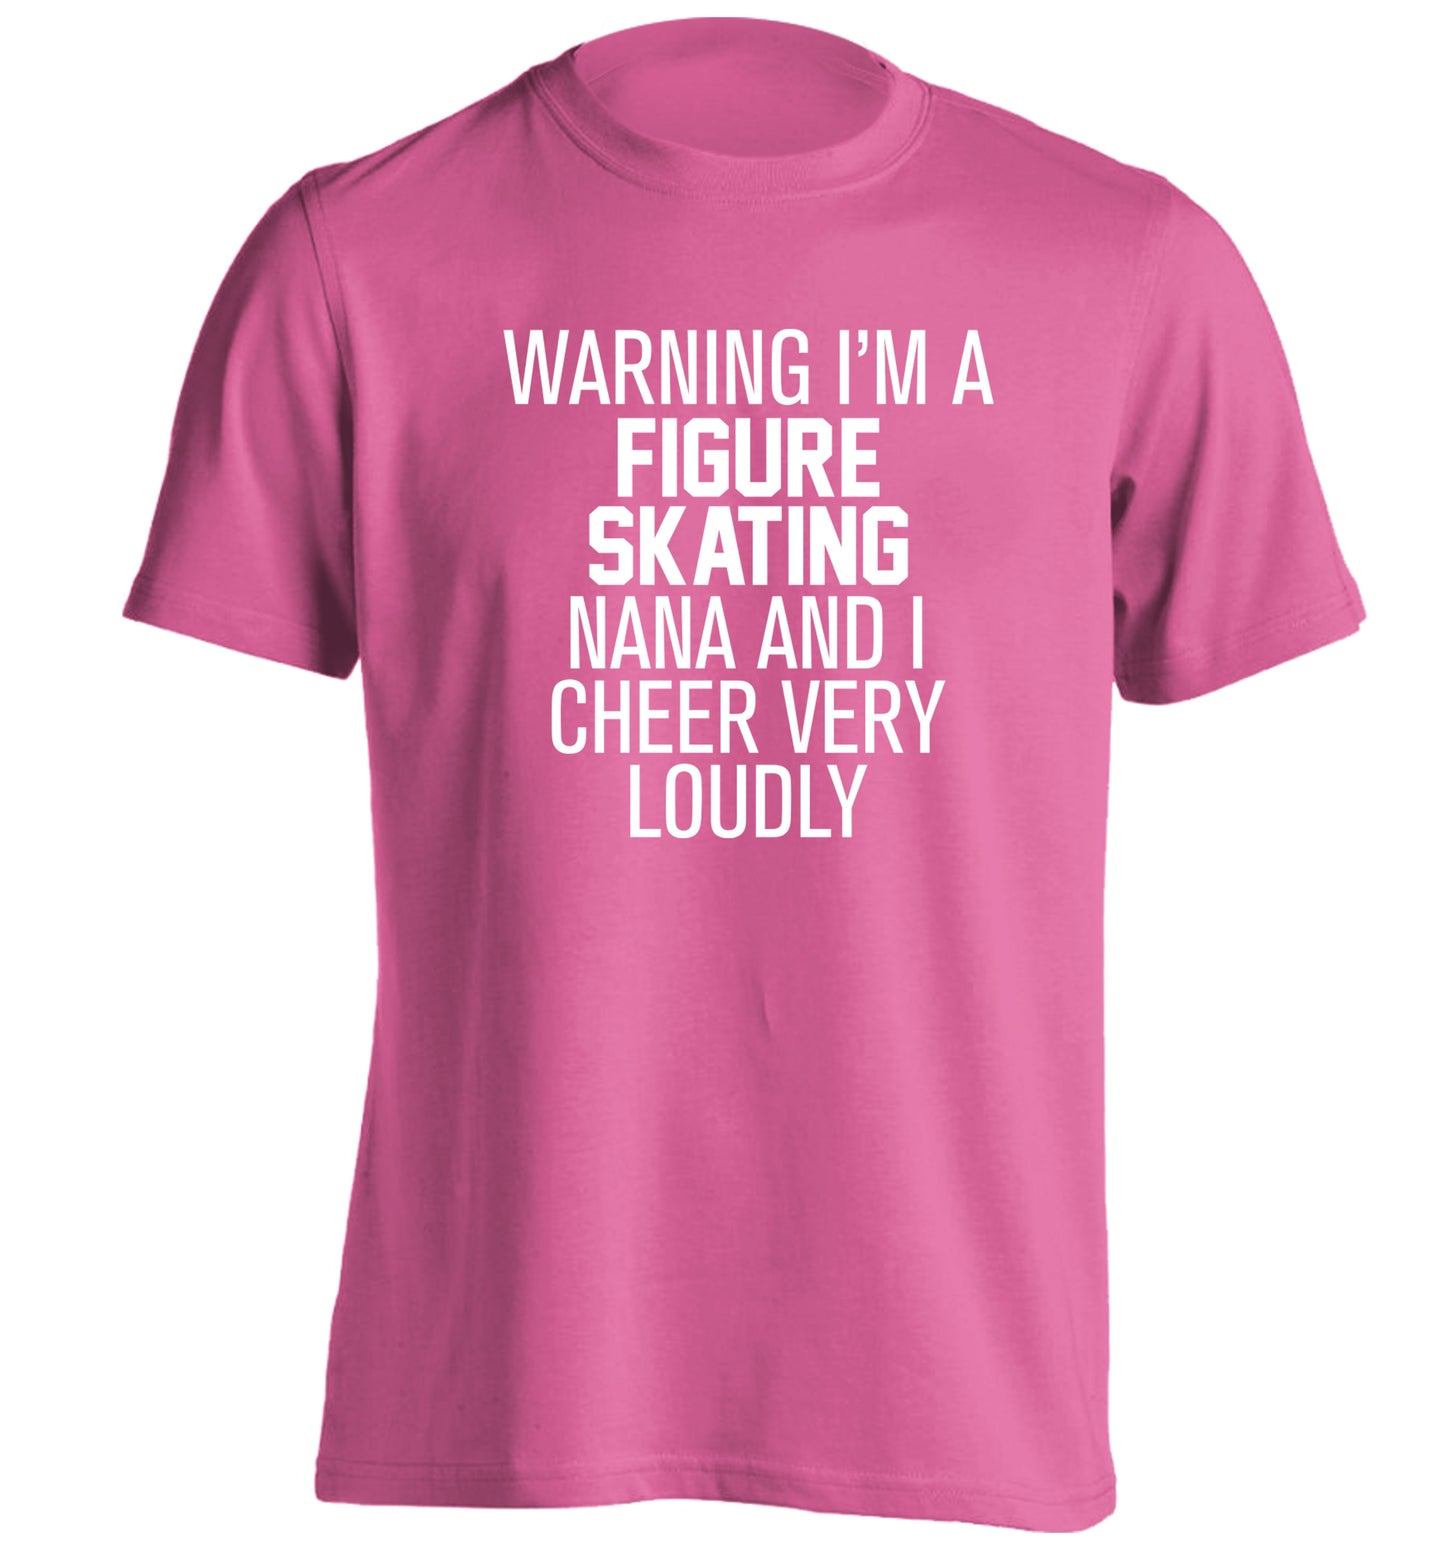 Warning I'm a figure skating nana and I cheer very loudly adults unisexpink Tshirt 2XL